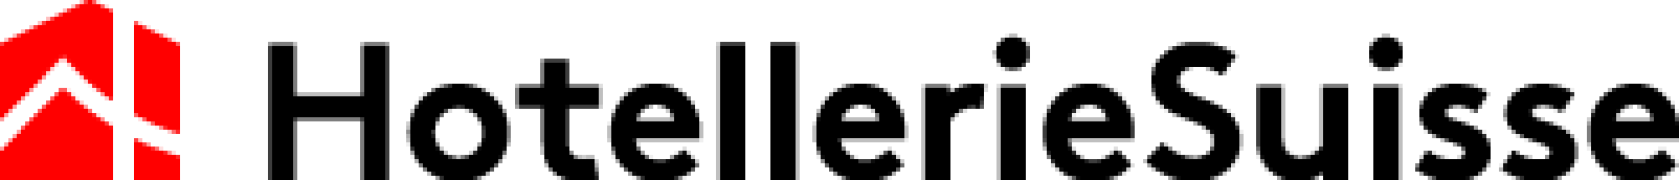 hs-logo-dachverband-rs-rgb_2.png